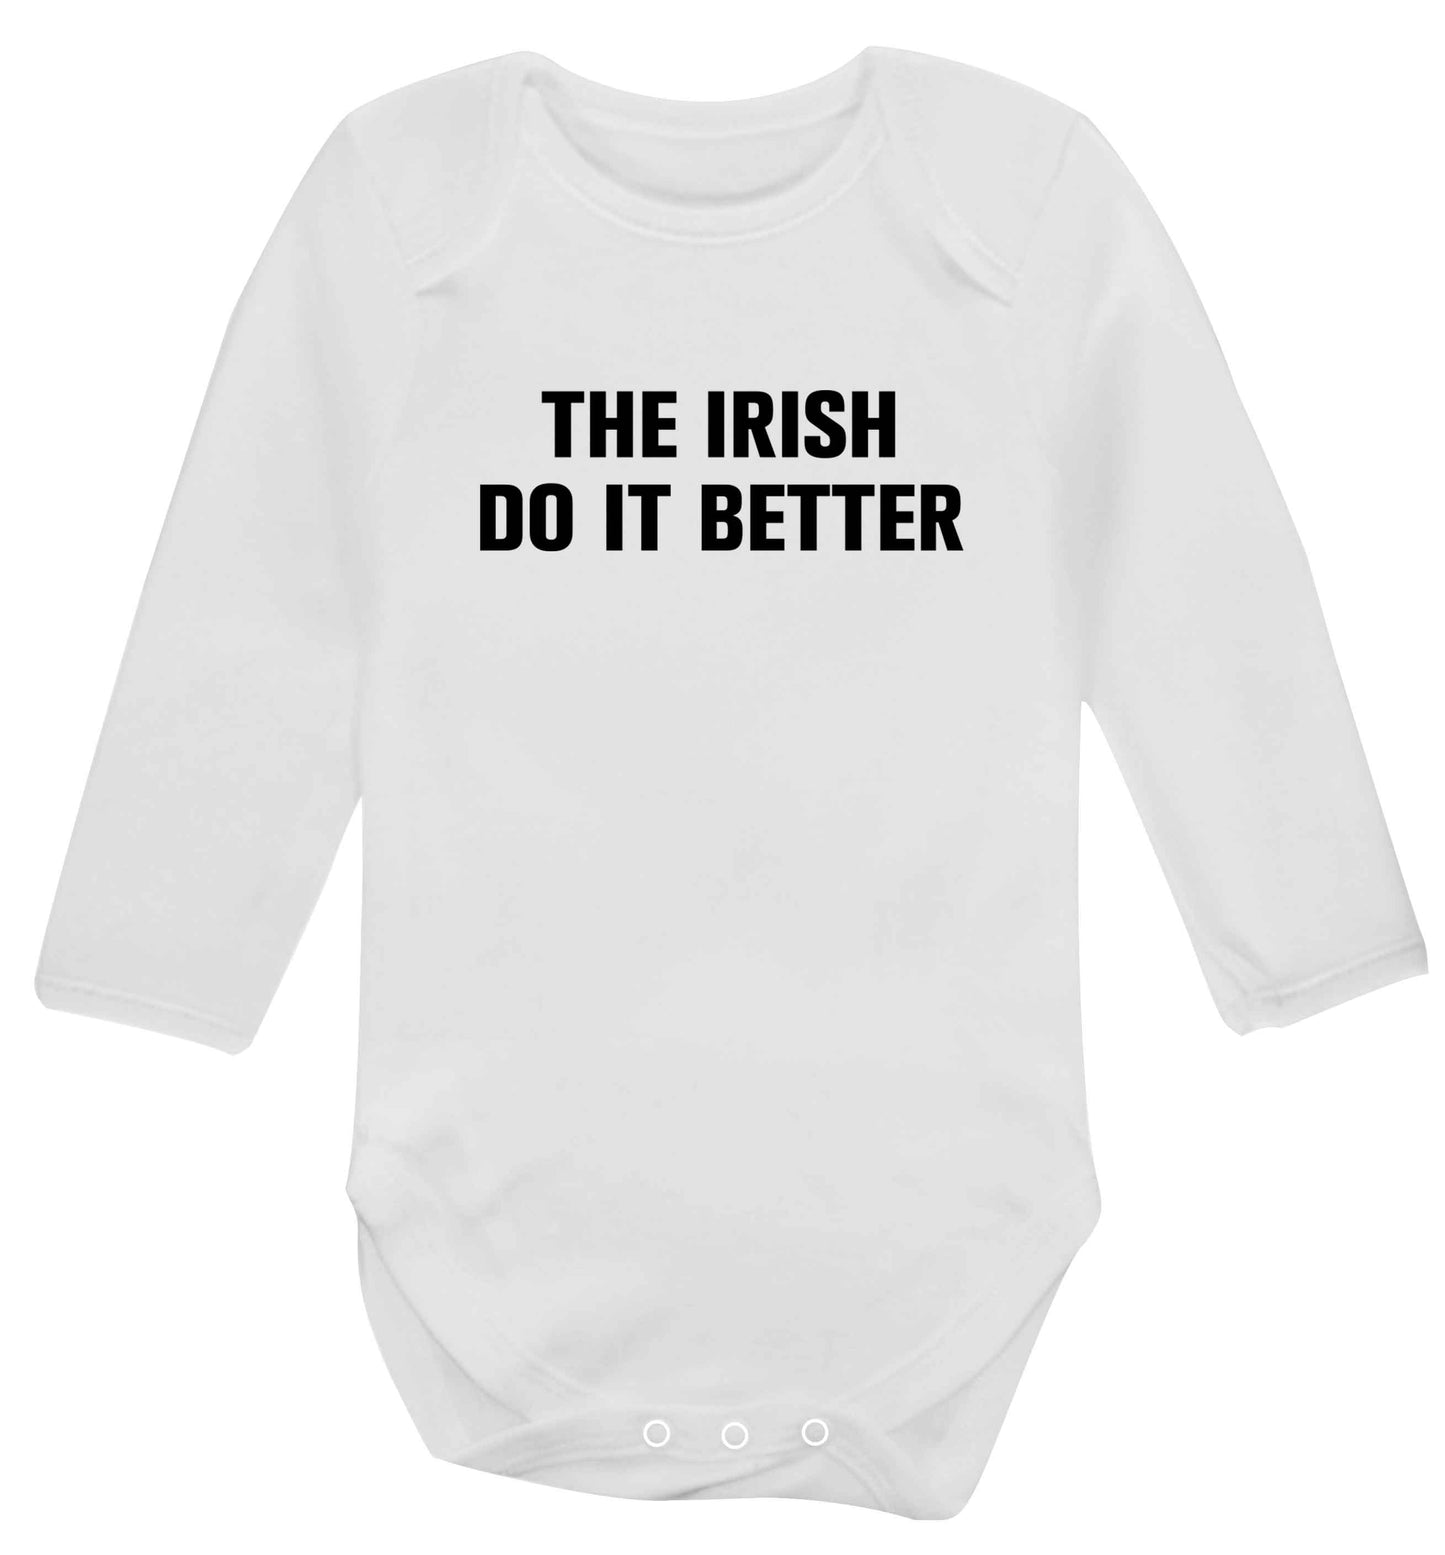 The Irish do it better baby vest long sleeved white 6-12 months